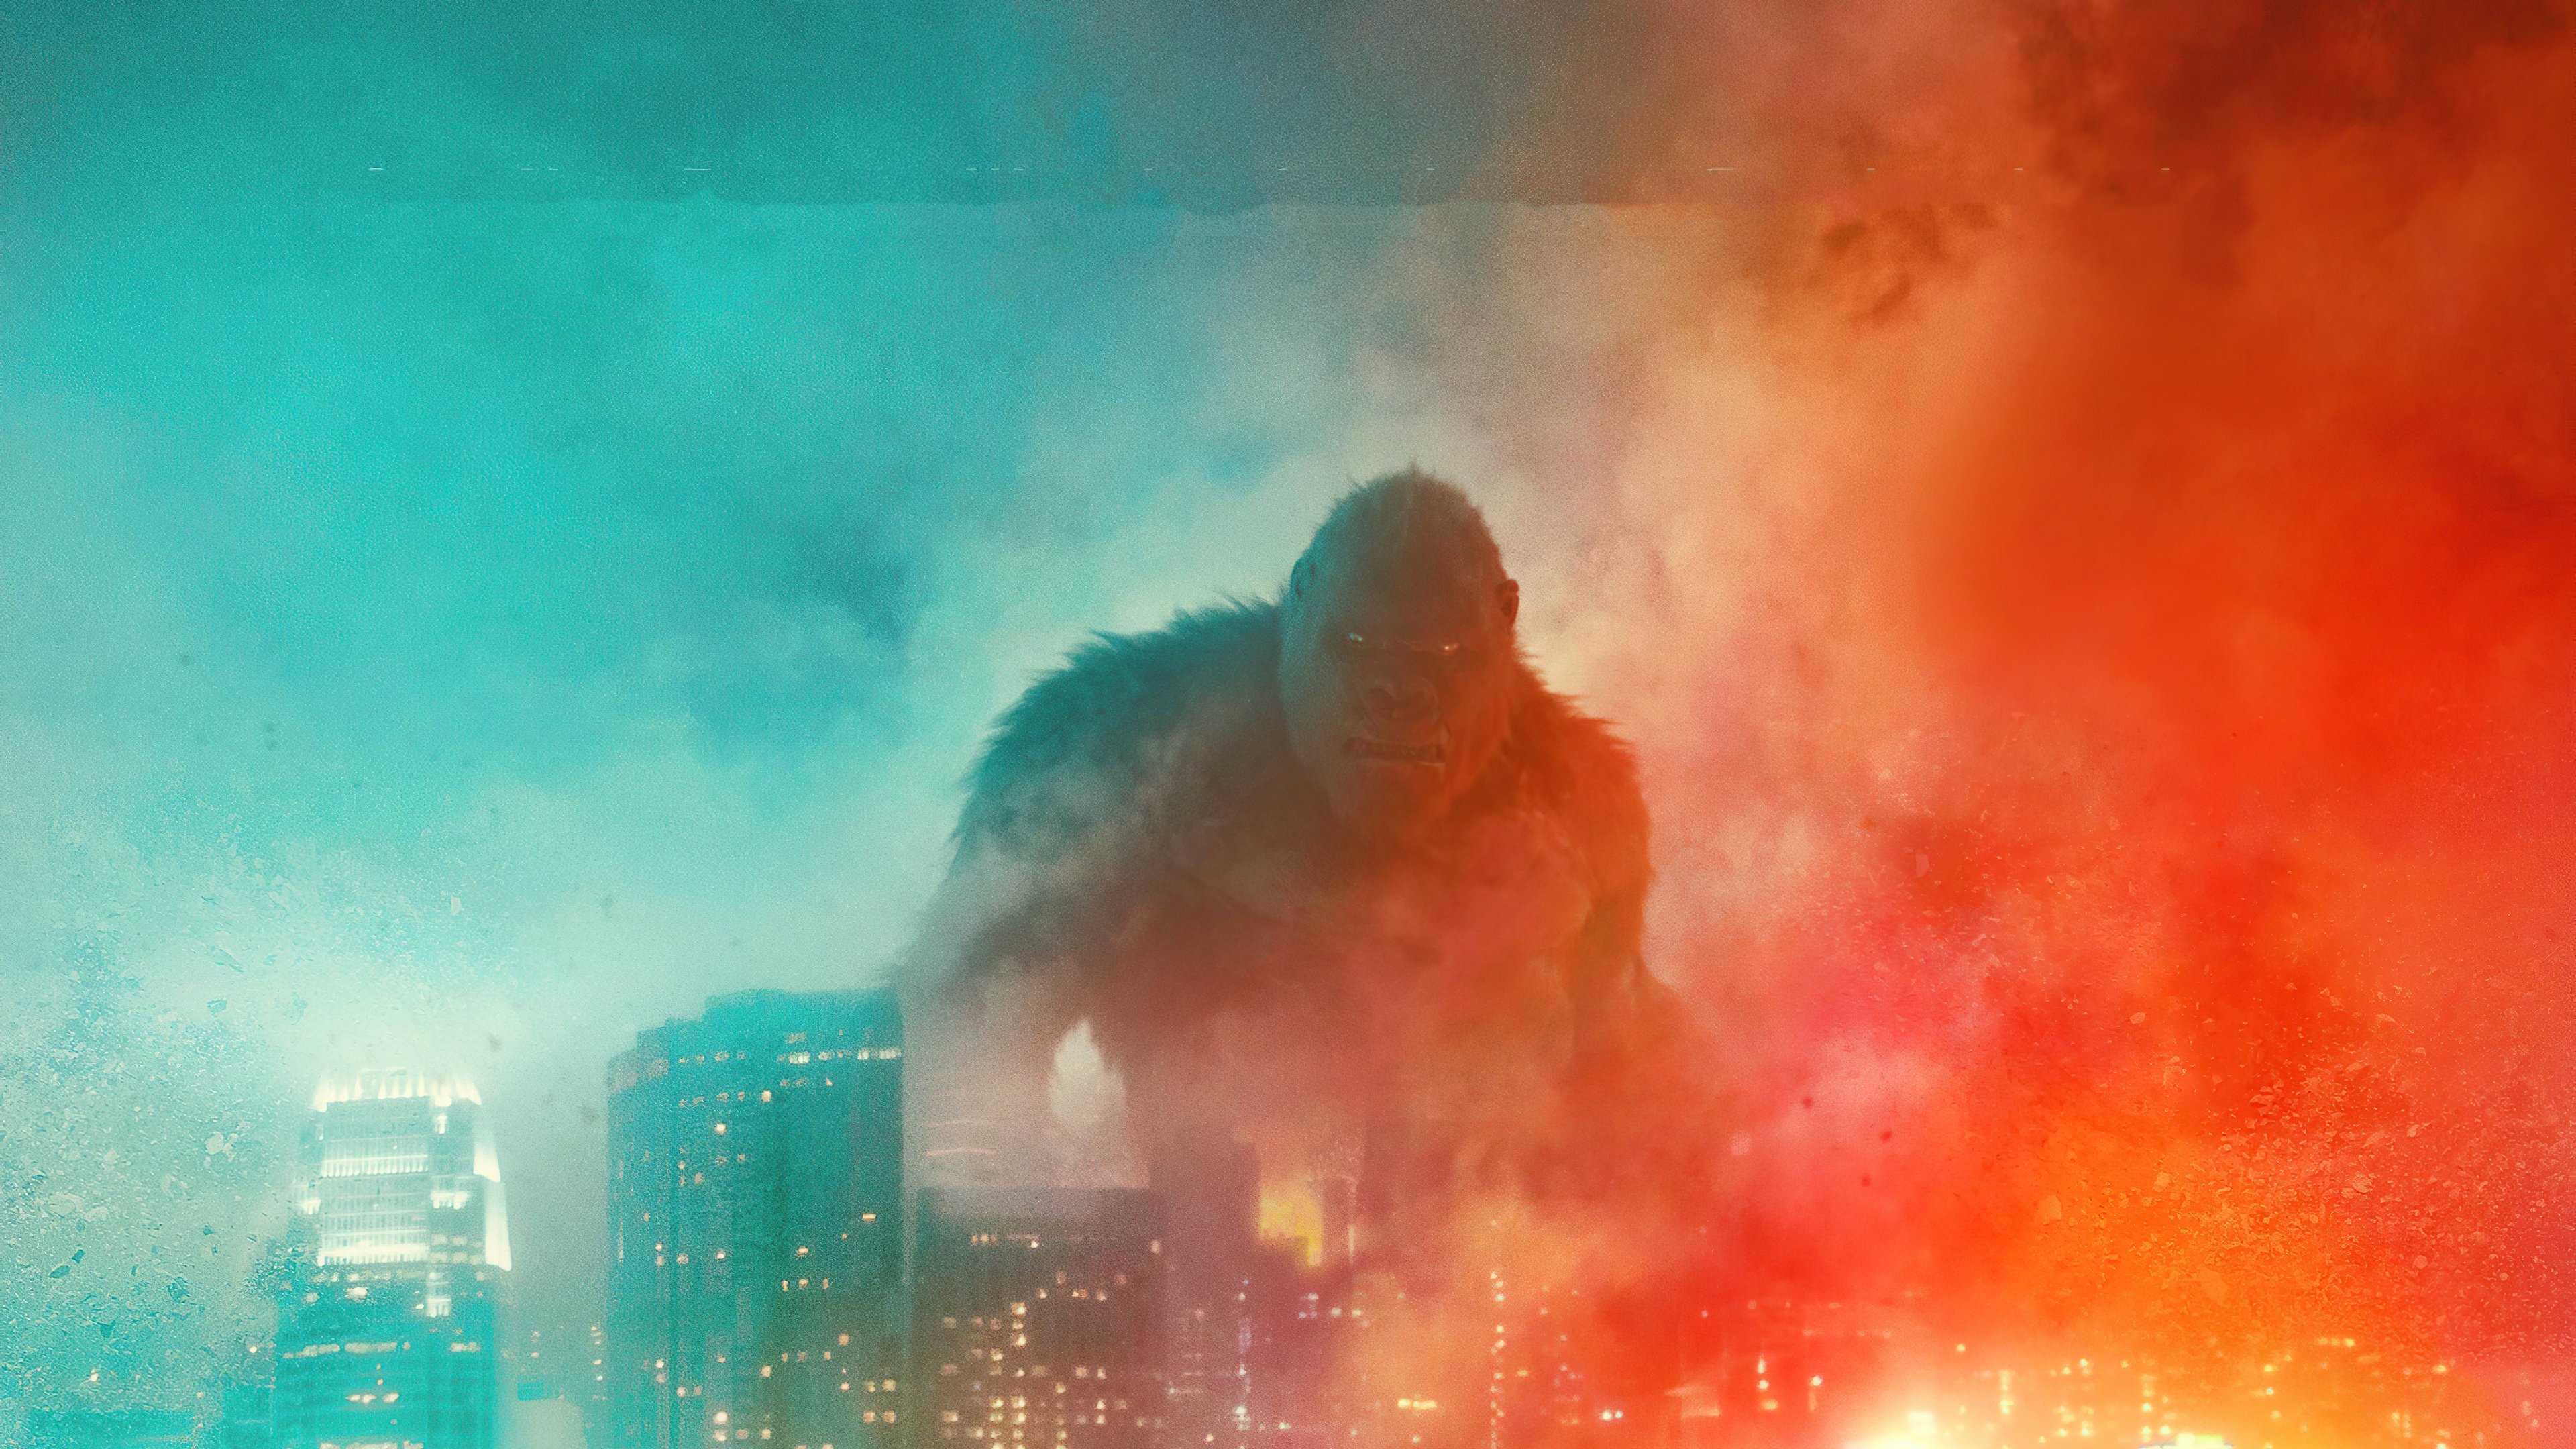 Fondos de pantalla Godzilla vs Kong